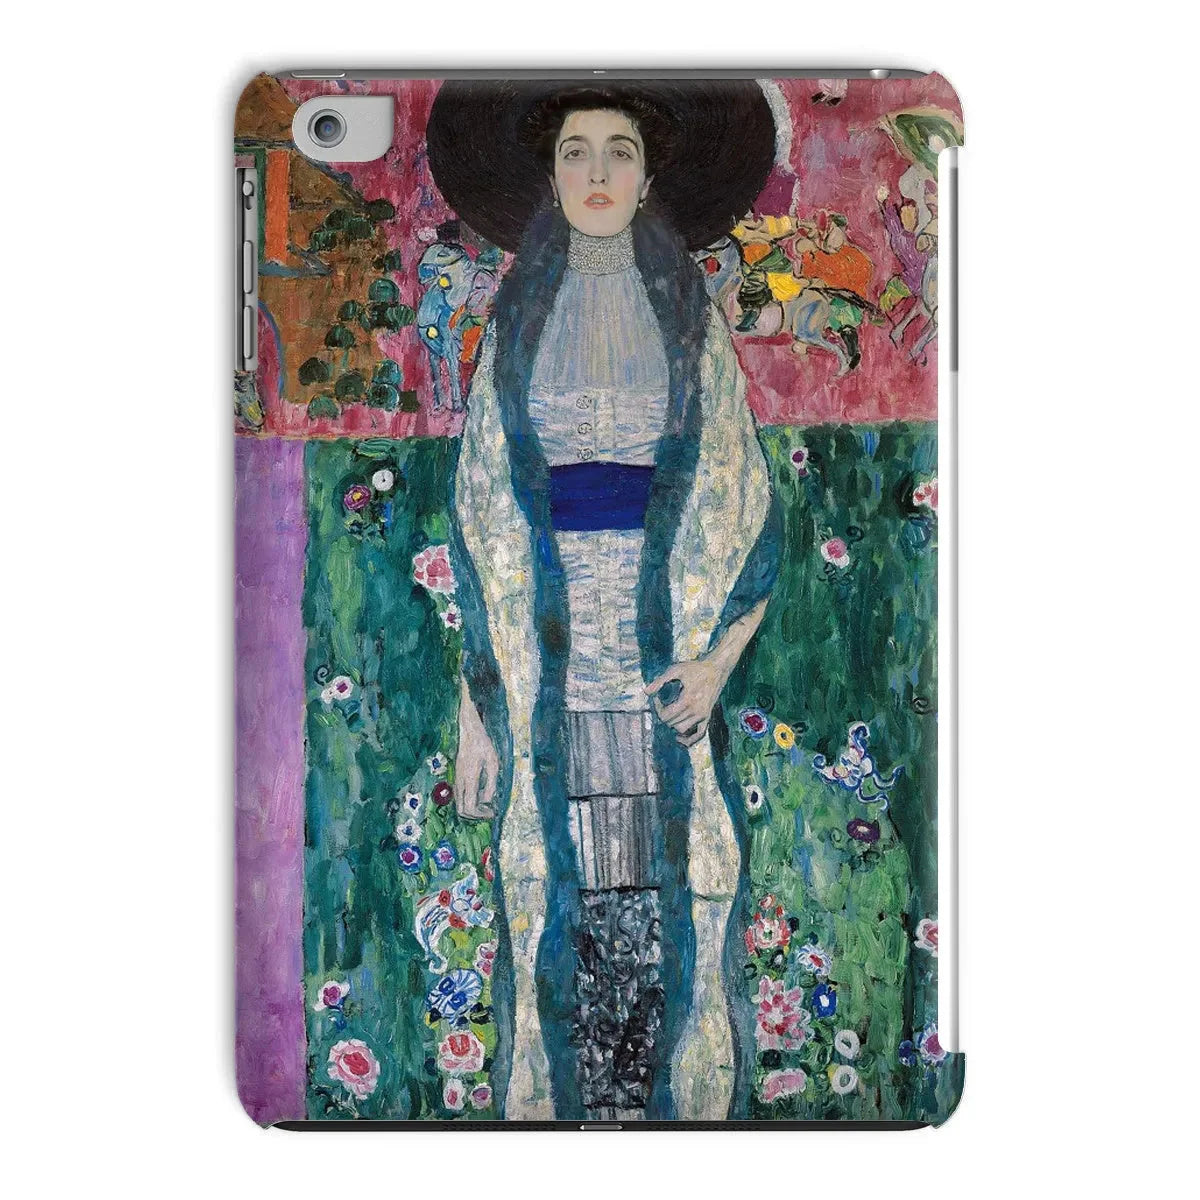 Adele Bloch - bauer By Gustav Klimt Aesthetic Ipad Case - Slim Designer Back Cover - Ipad Mini 1/2/3 - Gloss - Tablet